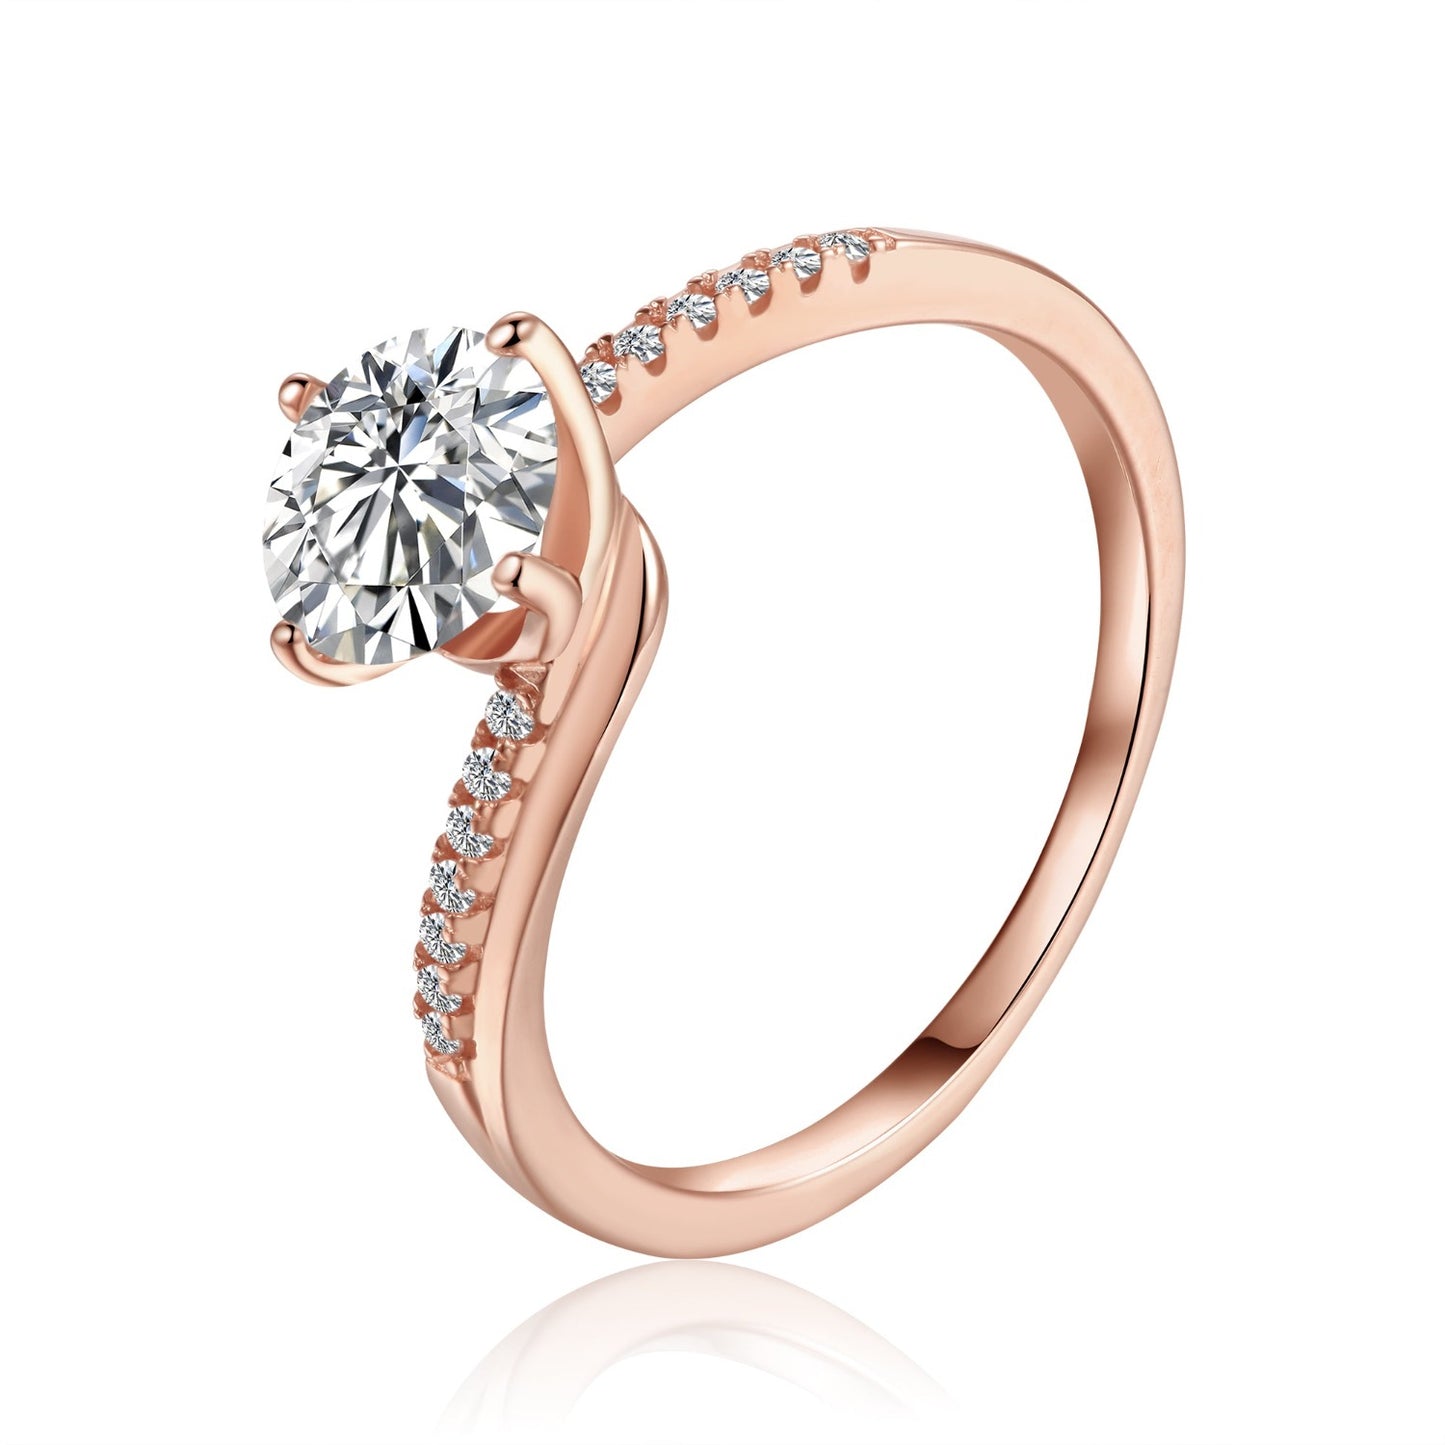 Elegant 1.00ct Moissanite Engagement Ring Set in 9ct Rose Gold